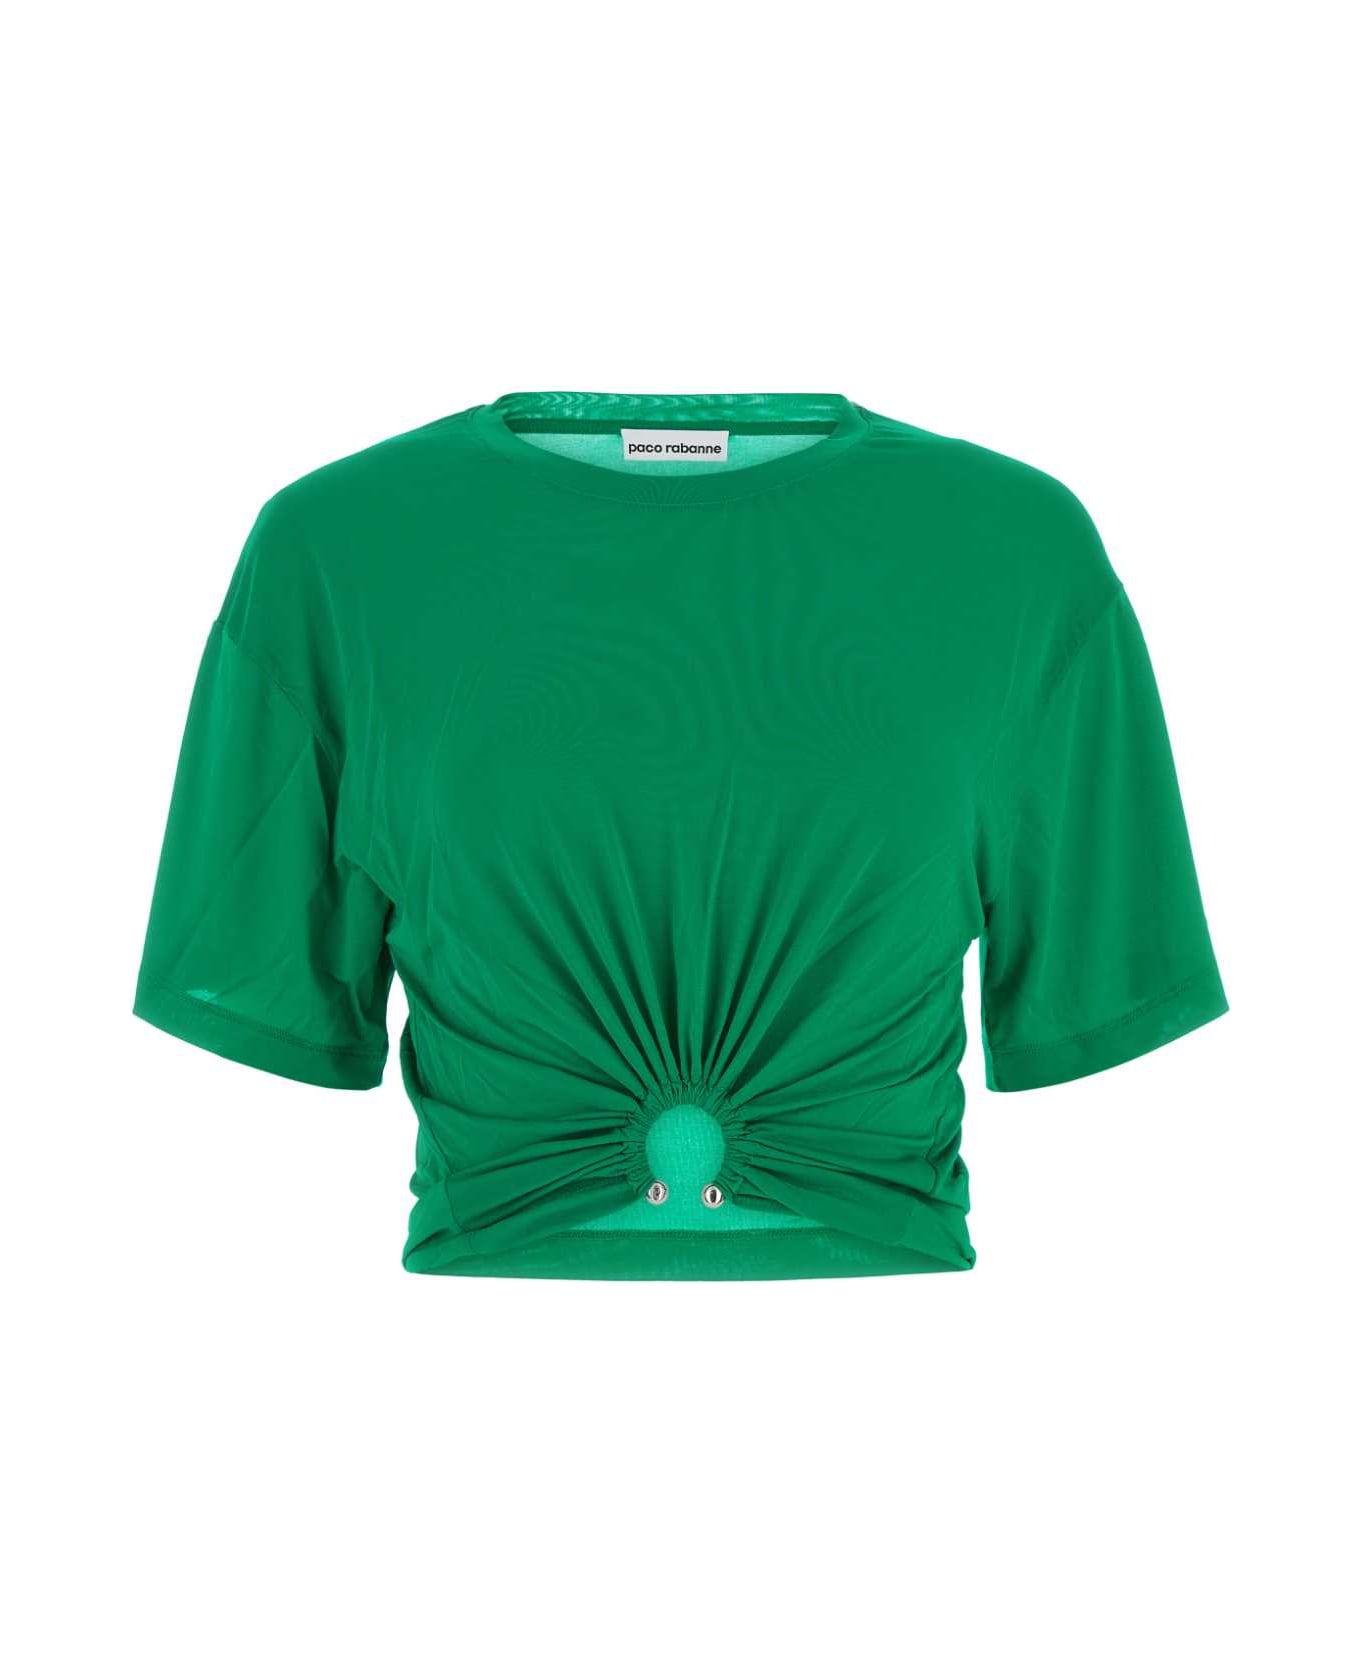 Paco Rabanne Green Stretch Viscose Top - EMERAUDE Tシャツ